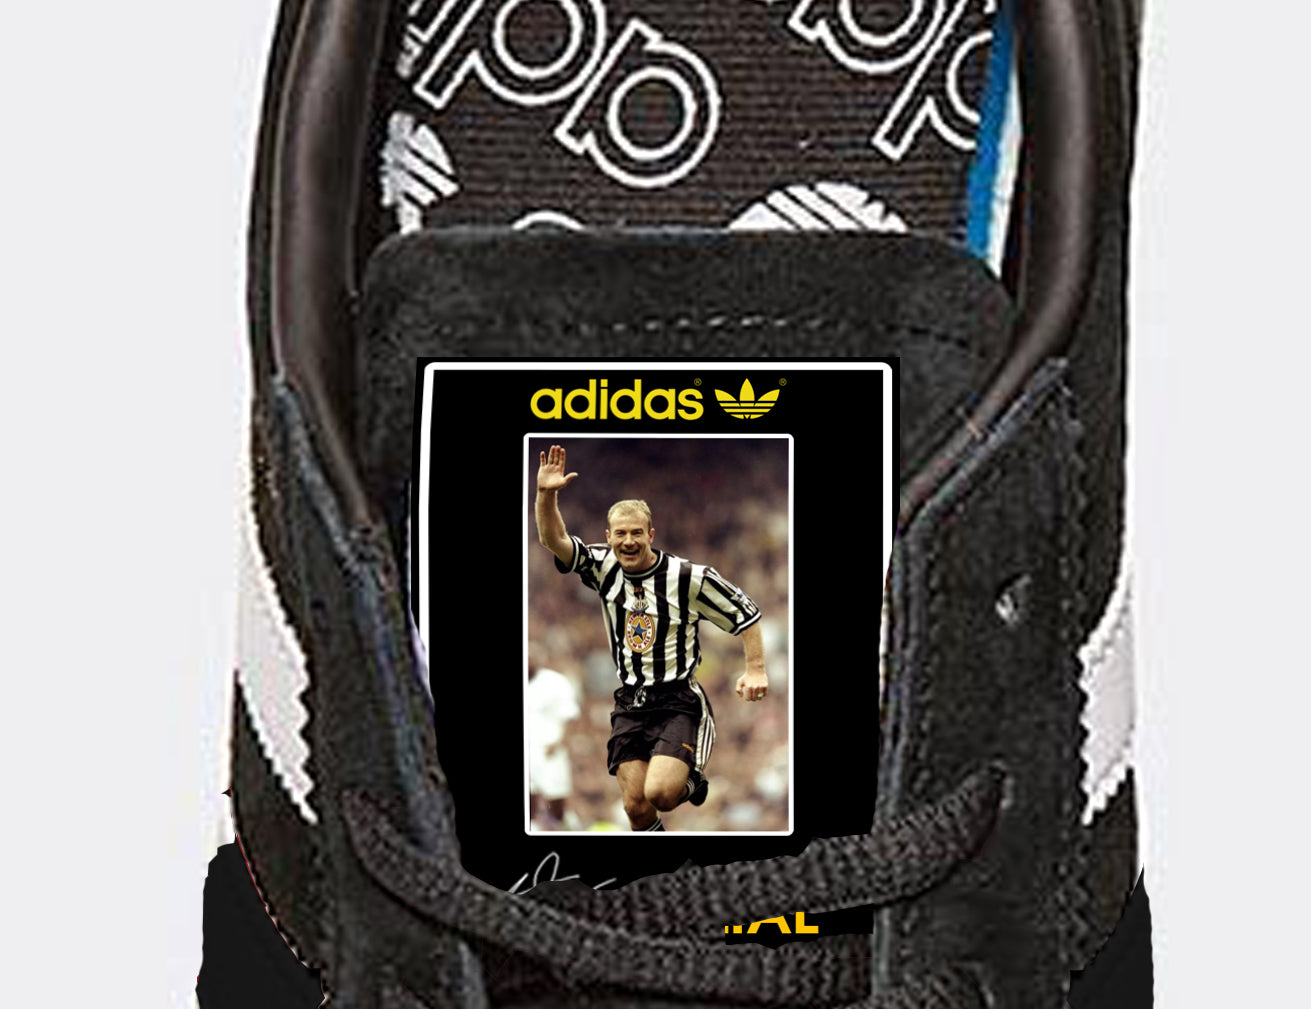 Limited edition retro Newcastle Alan Shearer inspired Black /White/  Adidas custom Handball Spezial trainers / sneakers